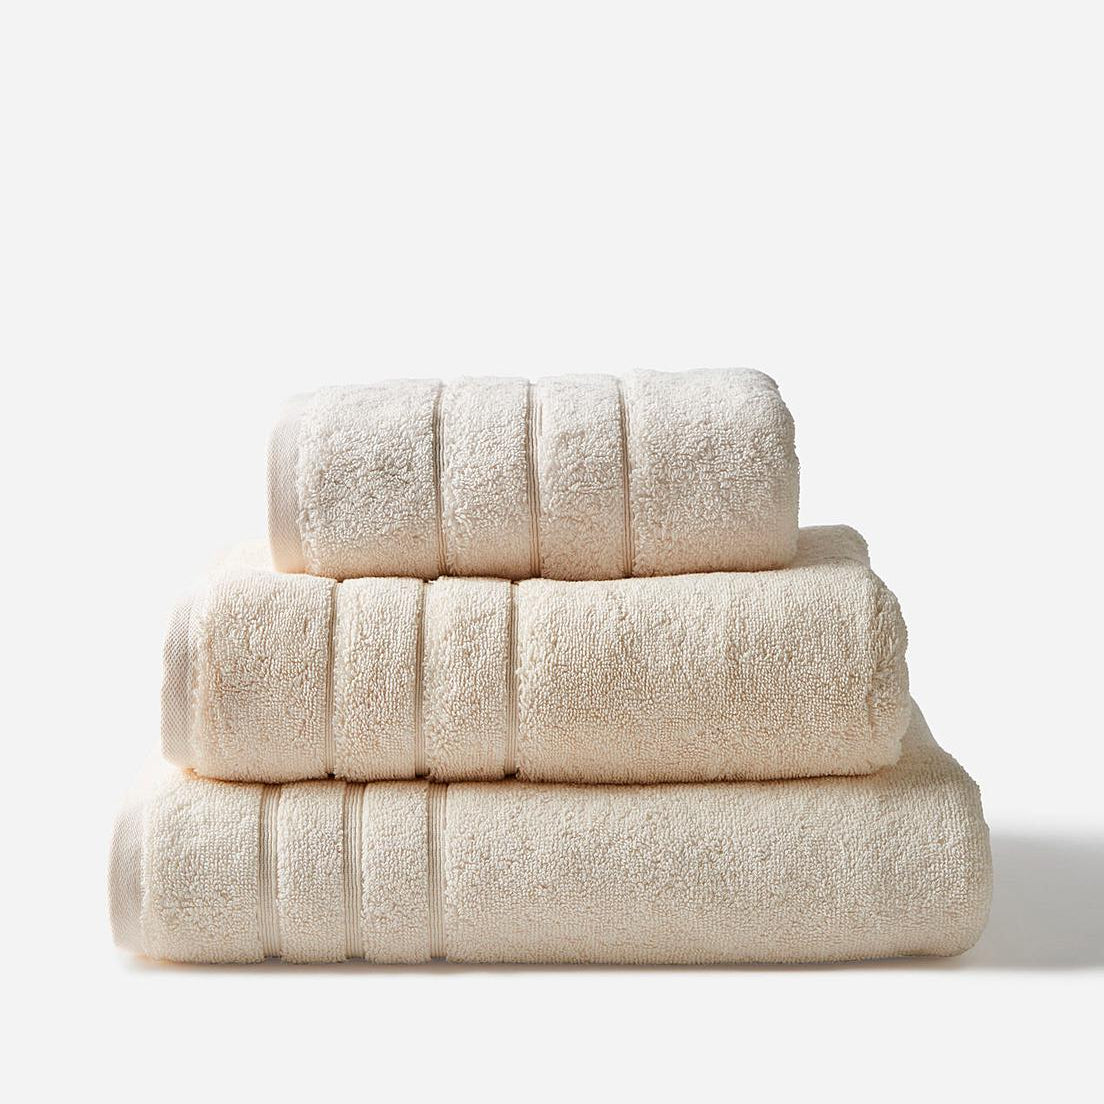 Hotel Quality Towels - Cream Bathroom Towels